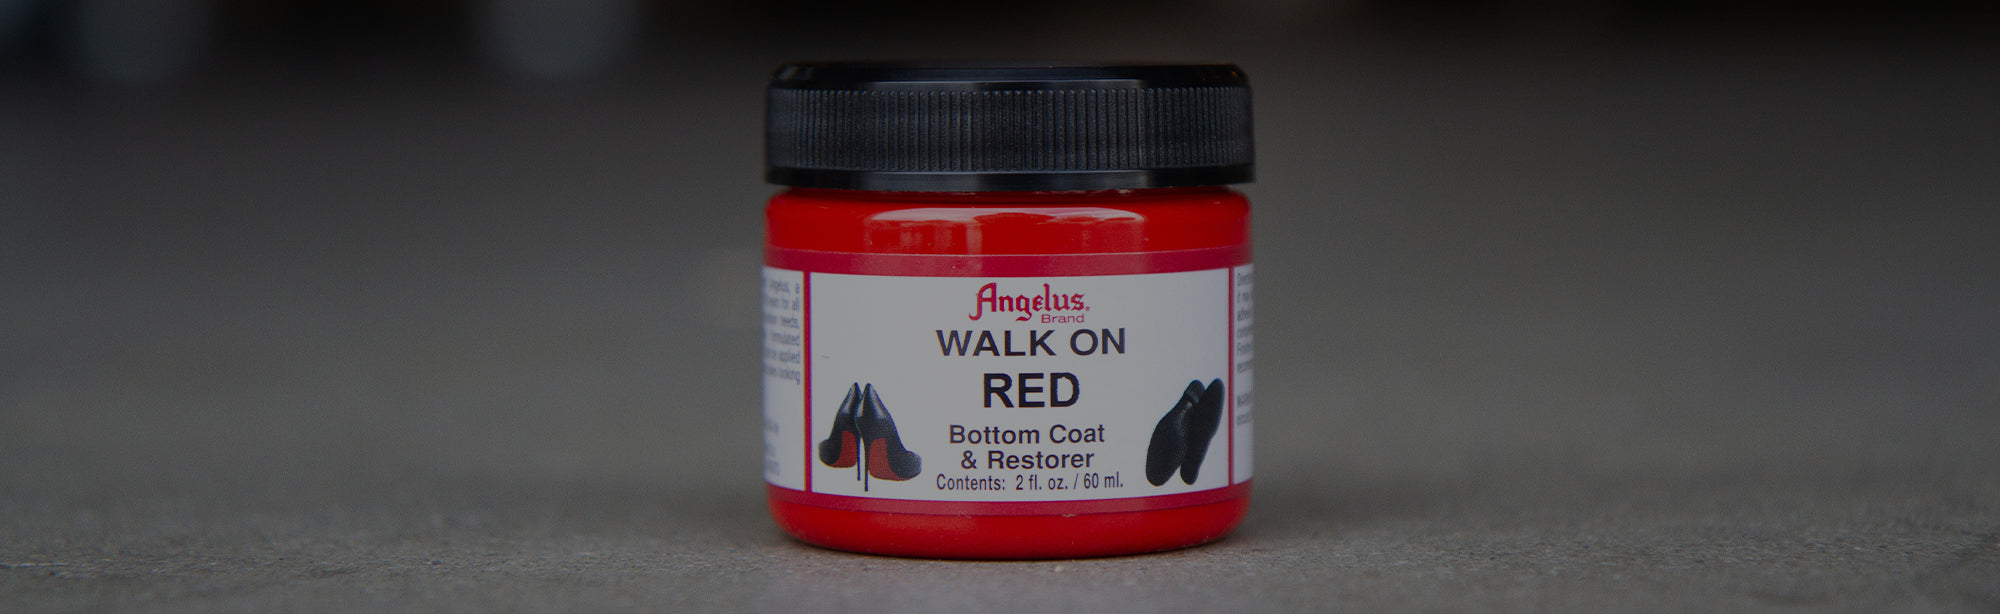  Walk On Red Bottom Coat & Restorer Angelus Brand